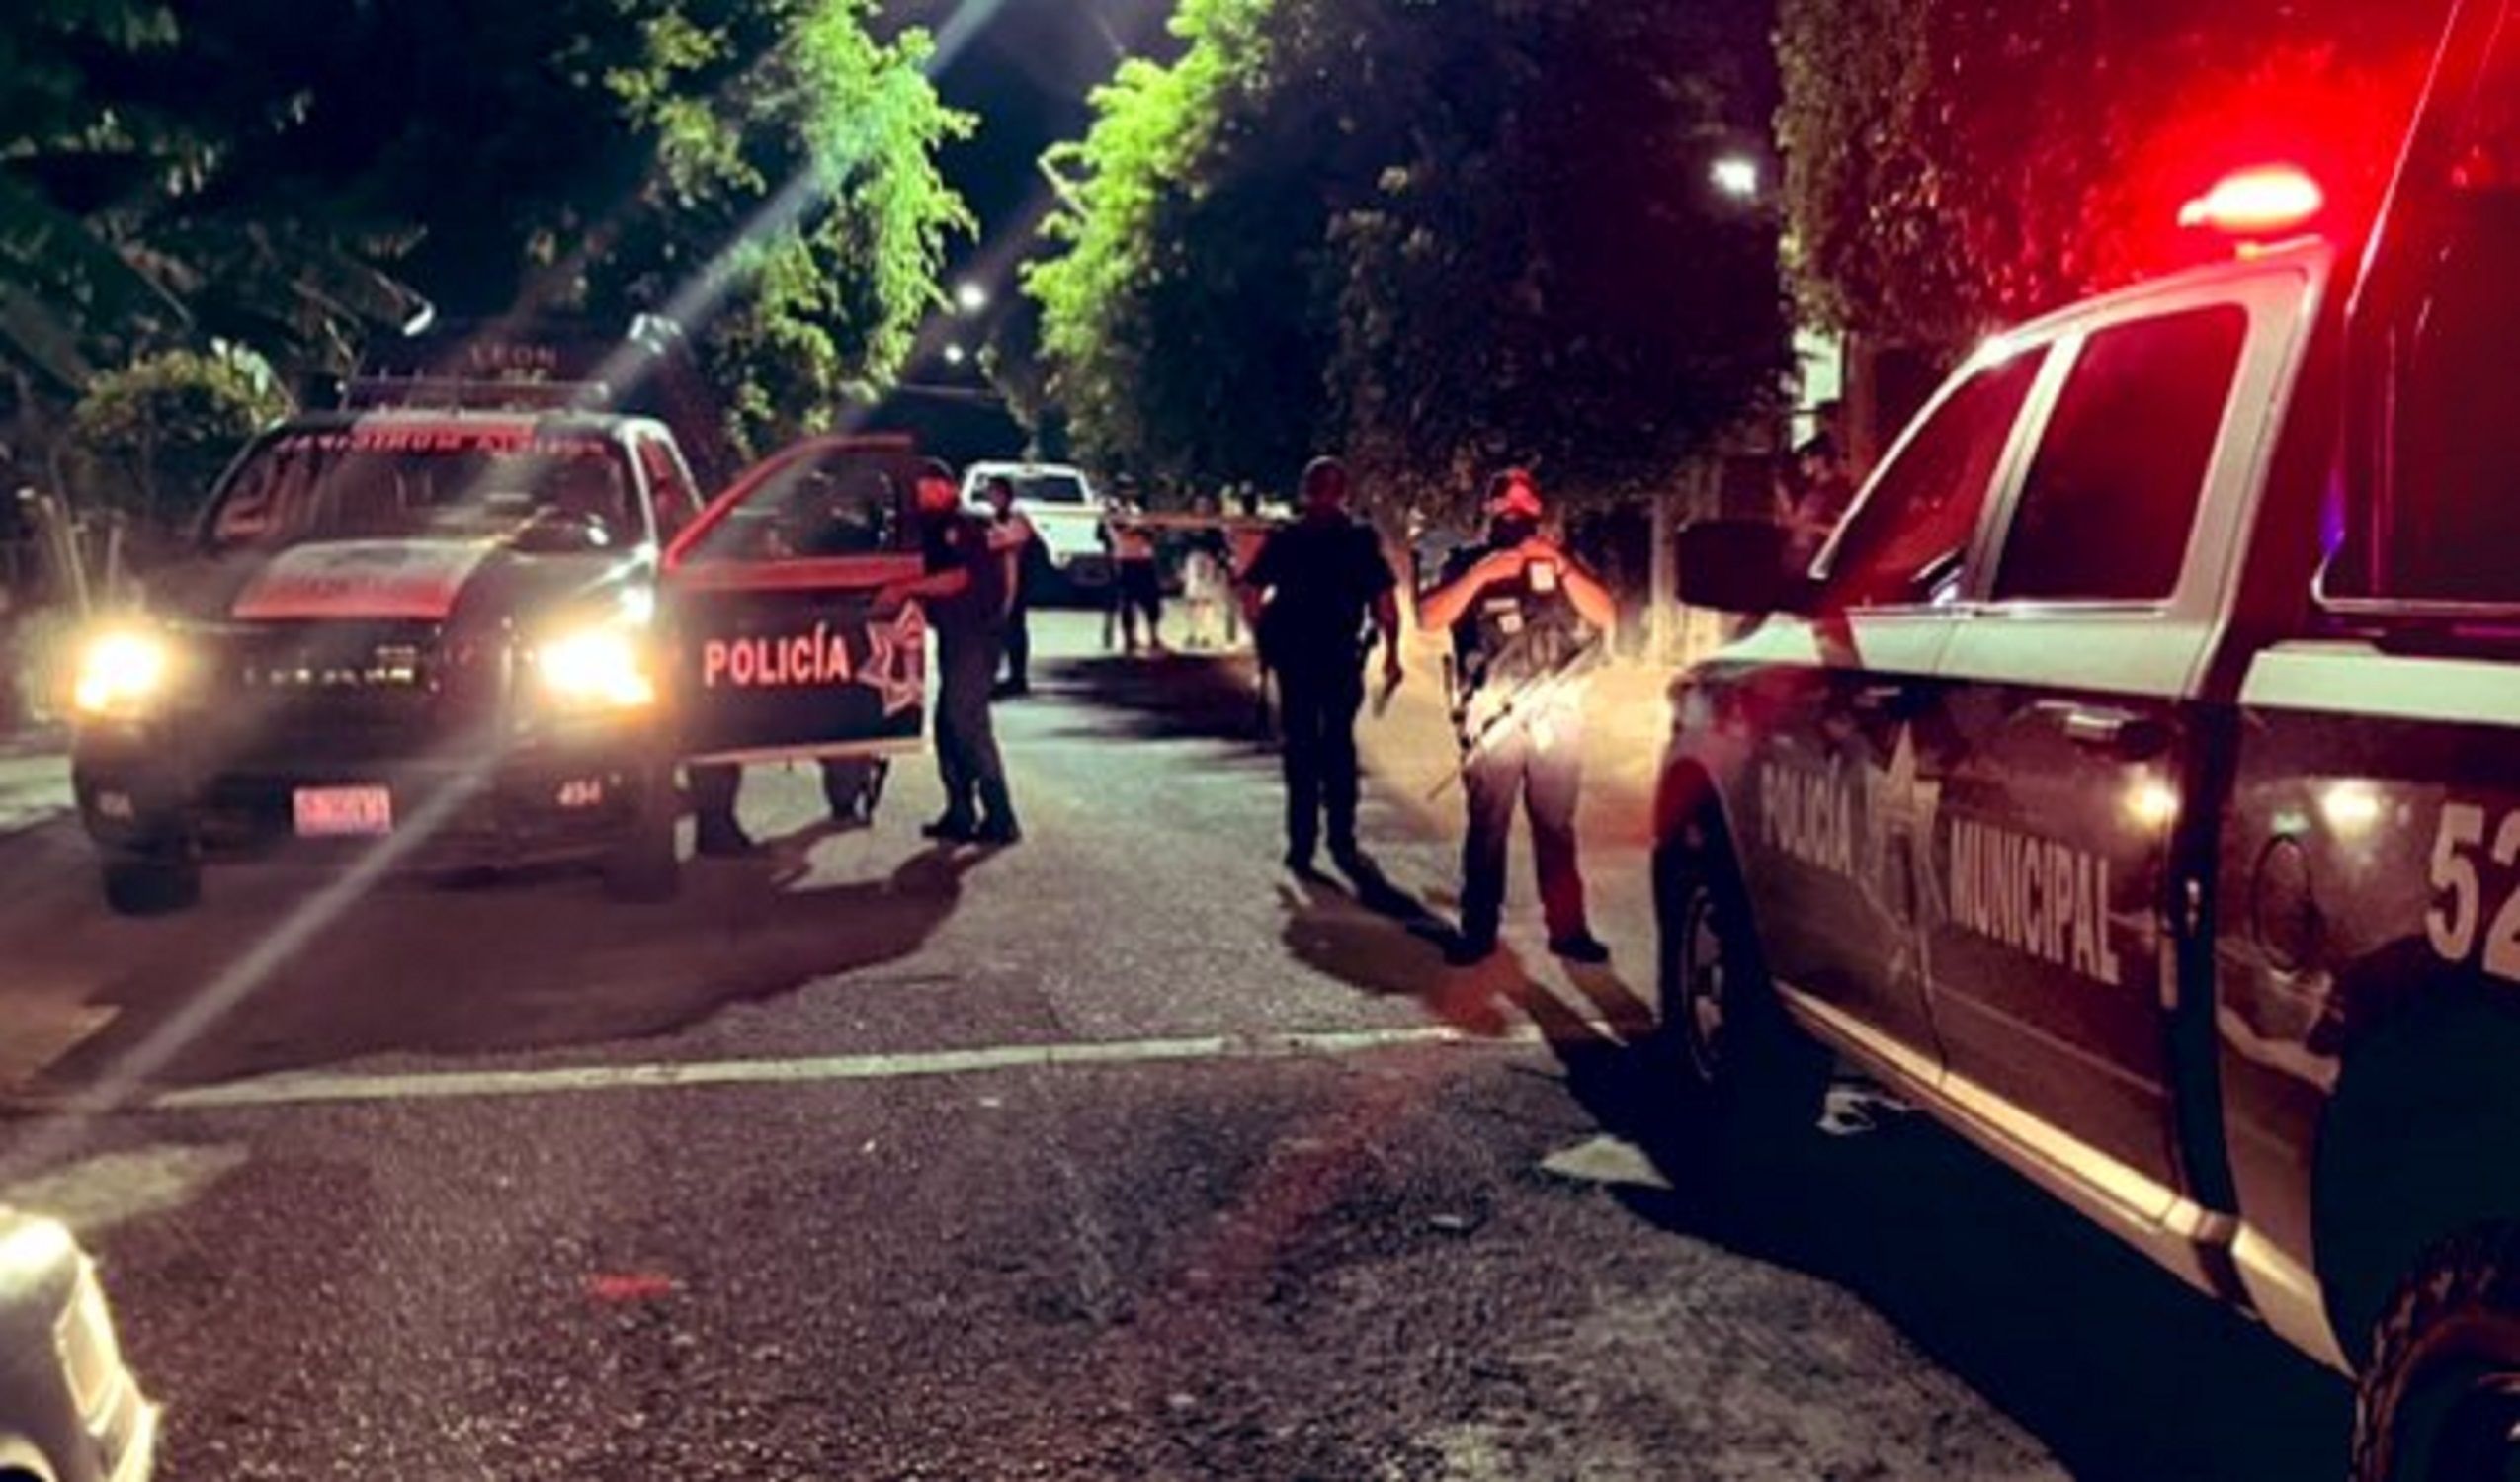 tiroteig estat de guanajuato mexic 6 morts 8 ferits celebracio familiar